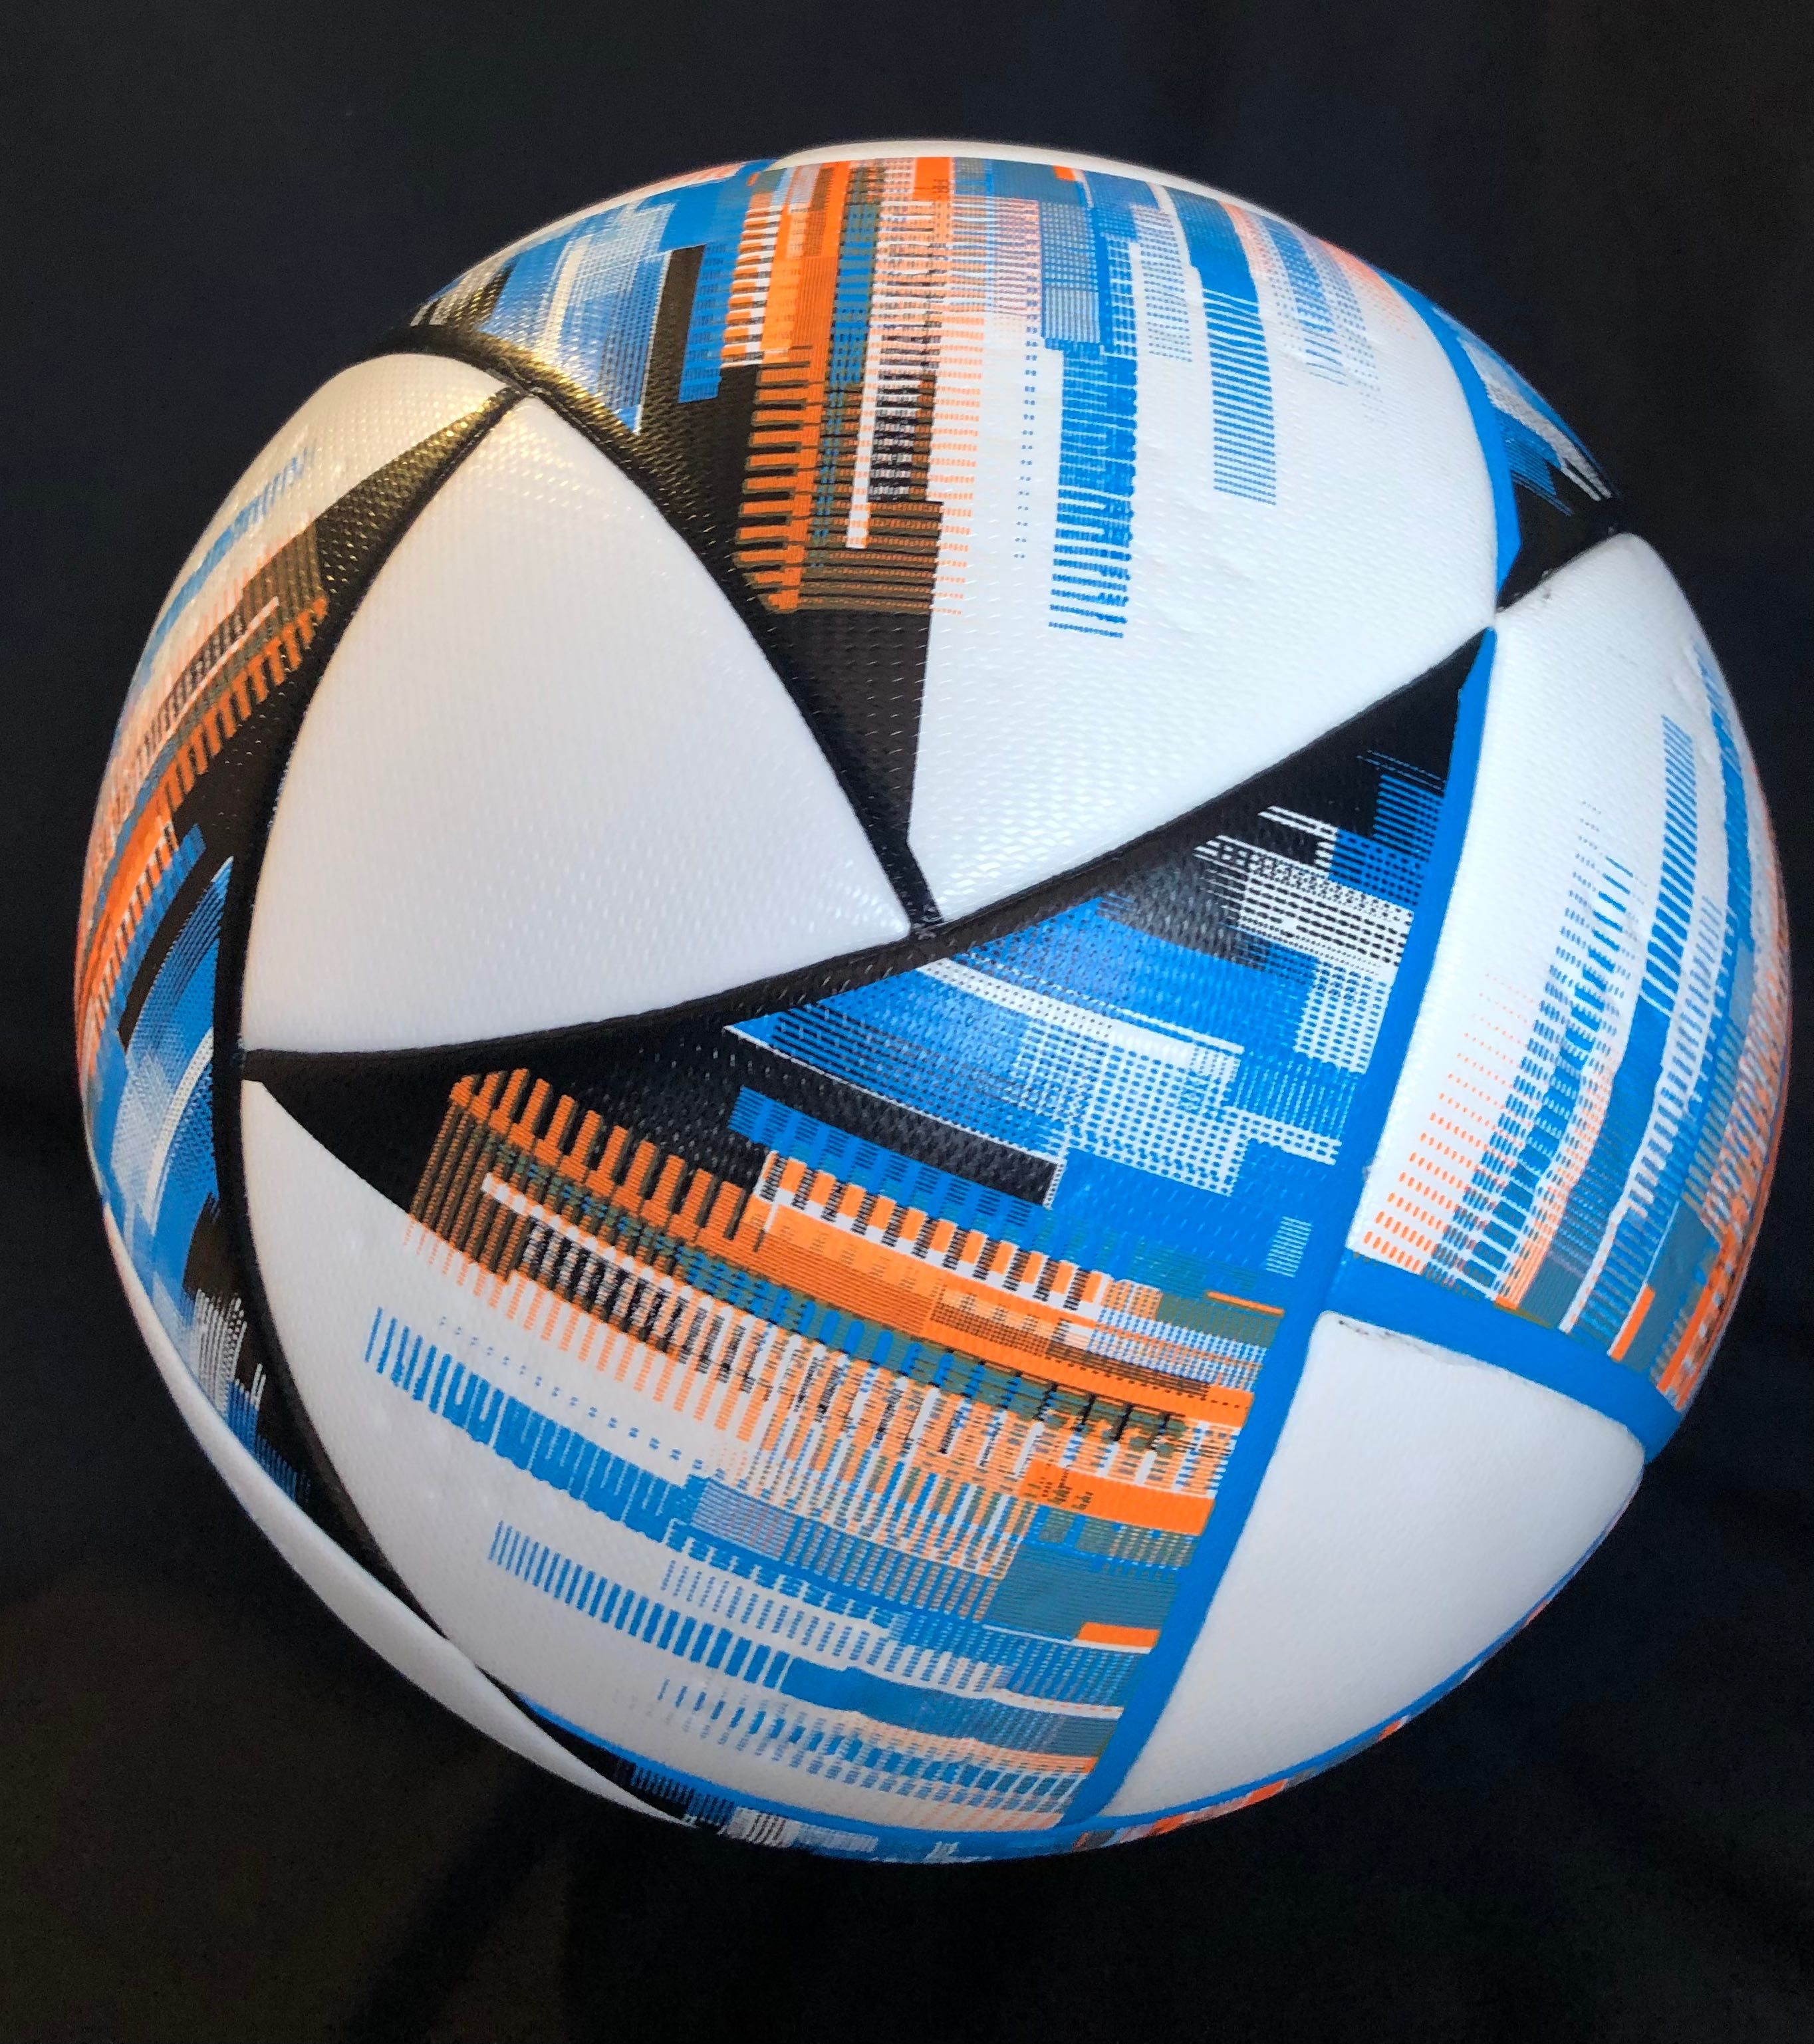 Безшовний футбольний м’яч UEFA NATIONS LEAGUE вищого гатунку